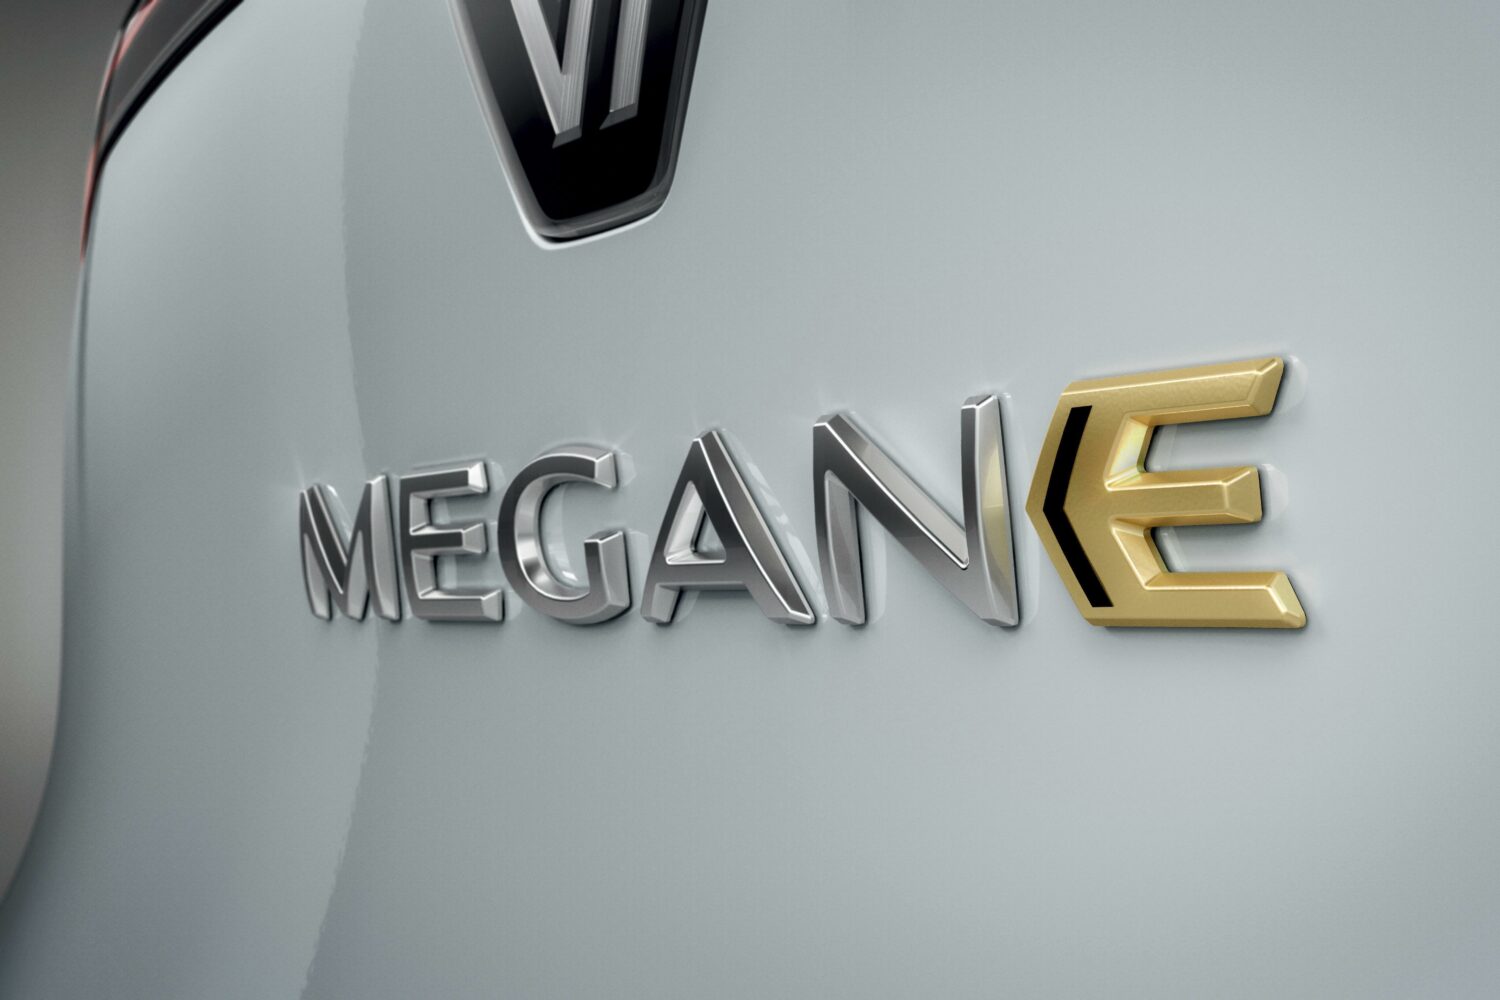 2021 - Nouvelle Renault Mégane E-TECH Electric - Studio